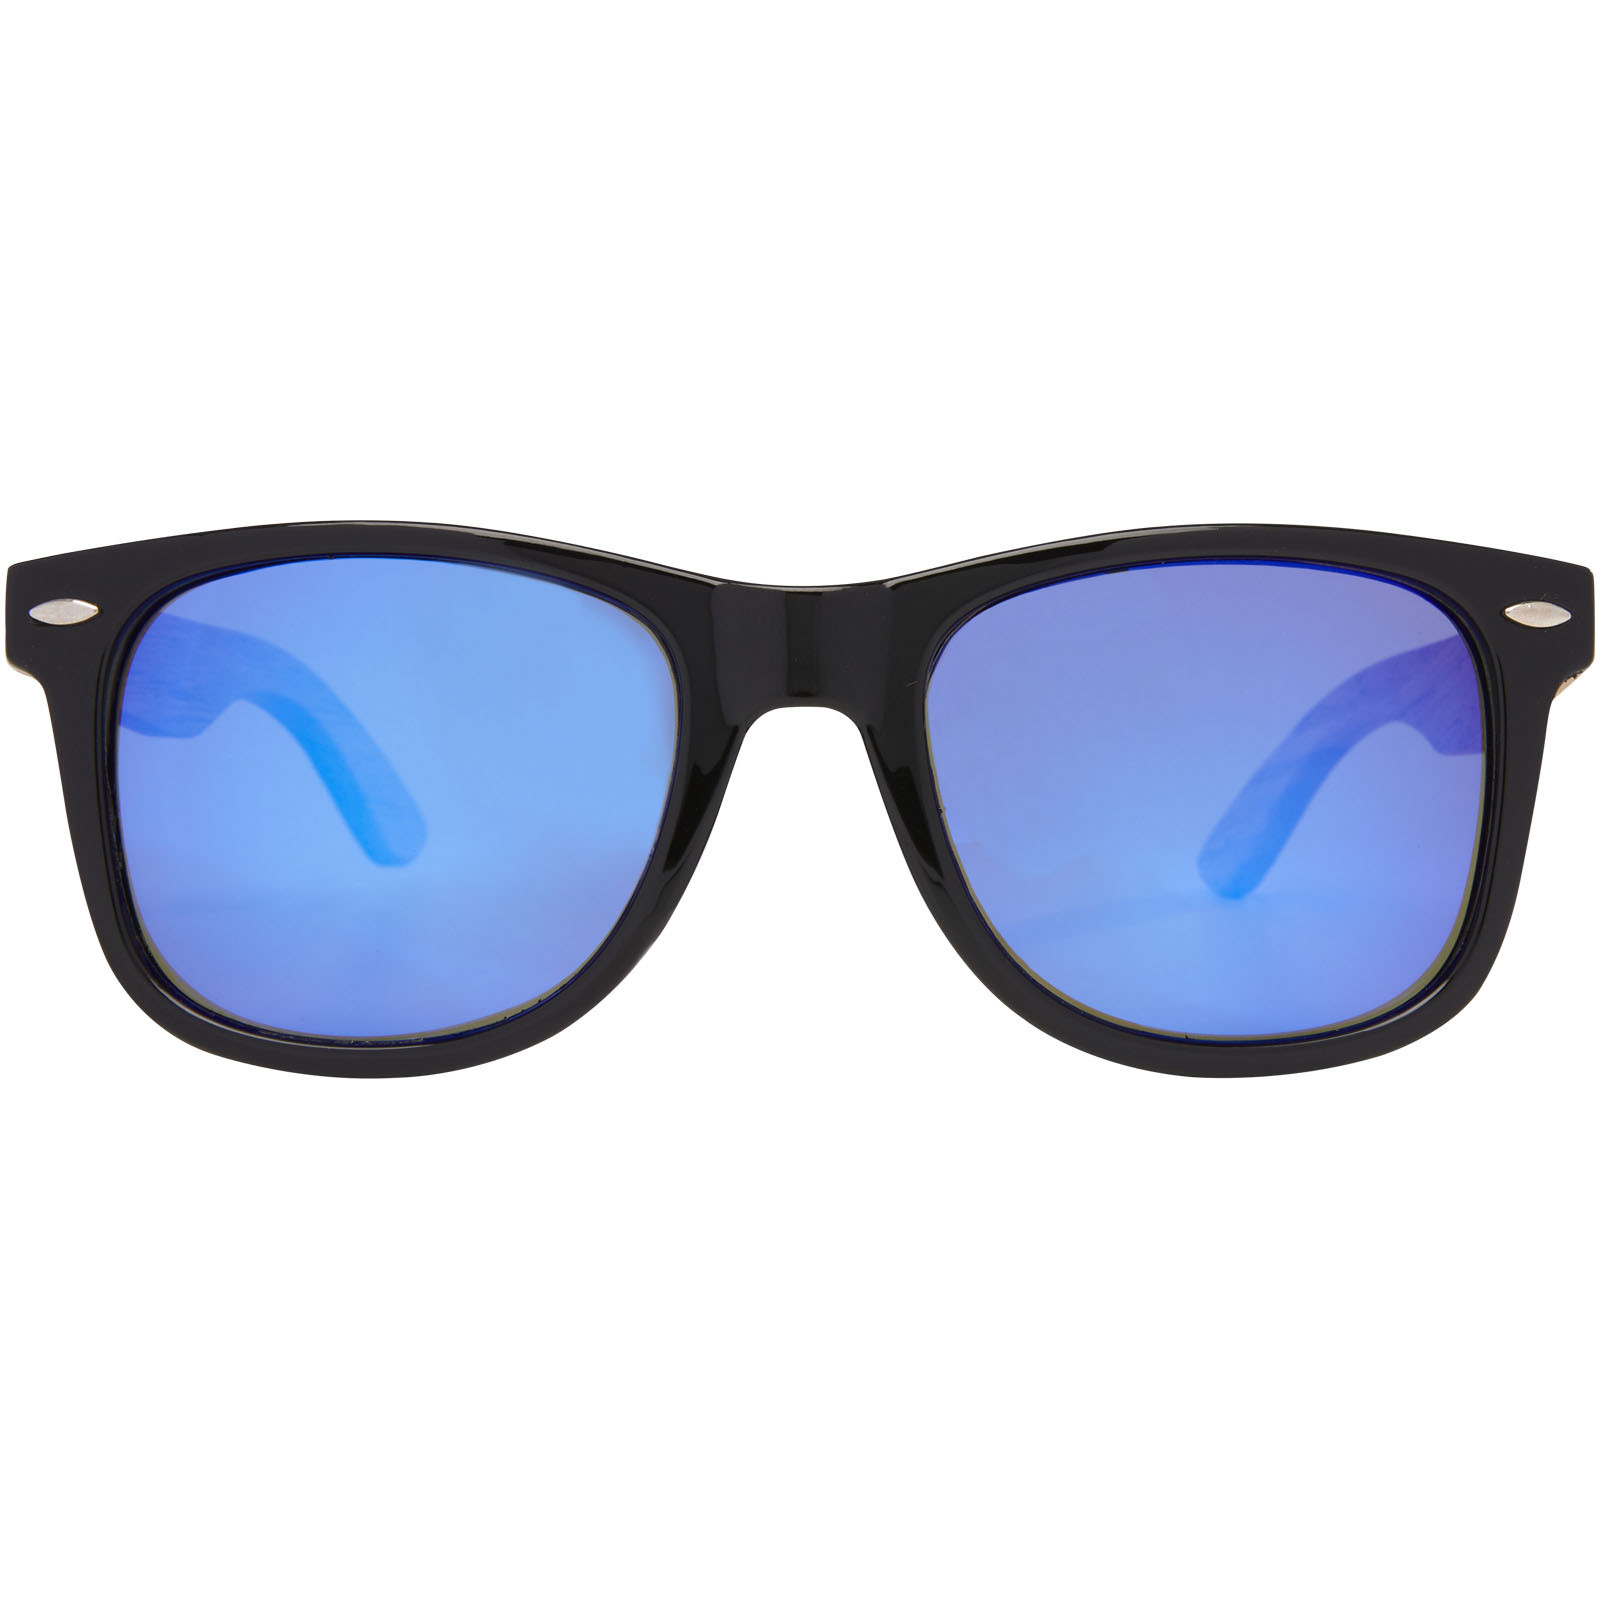 Advertising Sunglasses - Hiru rPET/wood mirrored polarized sunglasses in gift box - 2